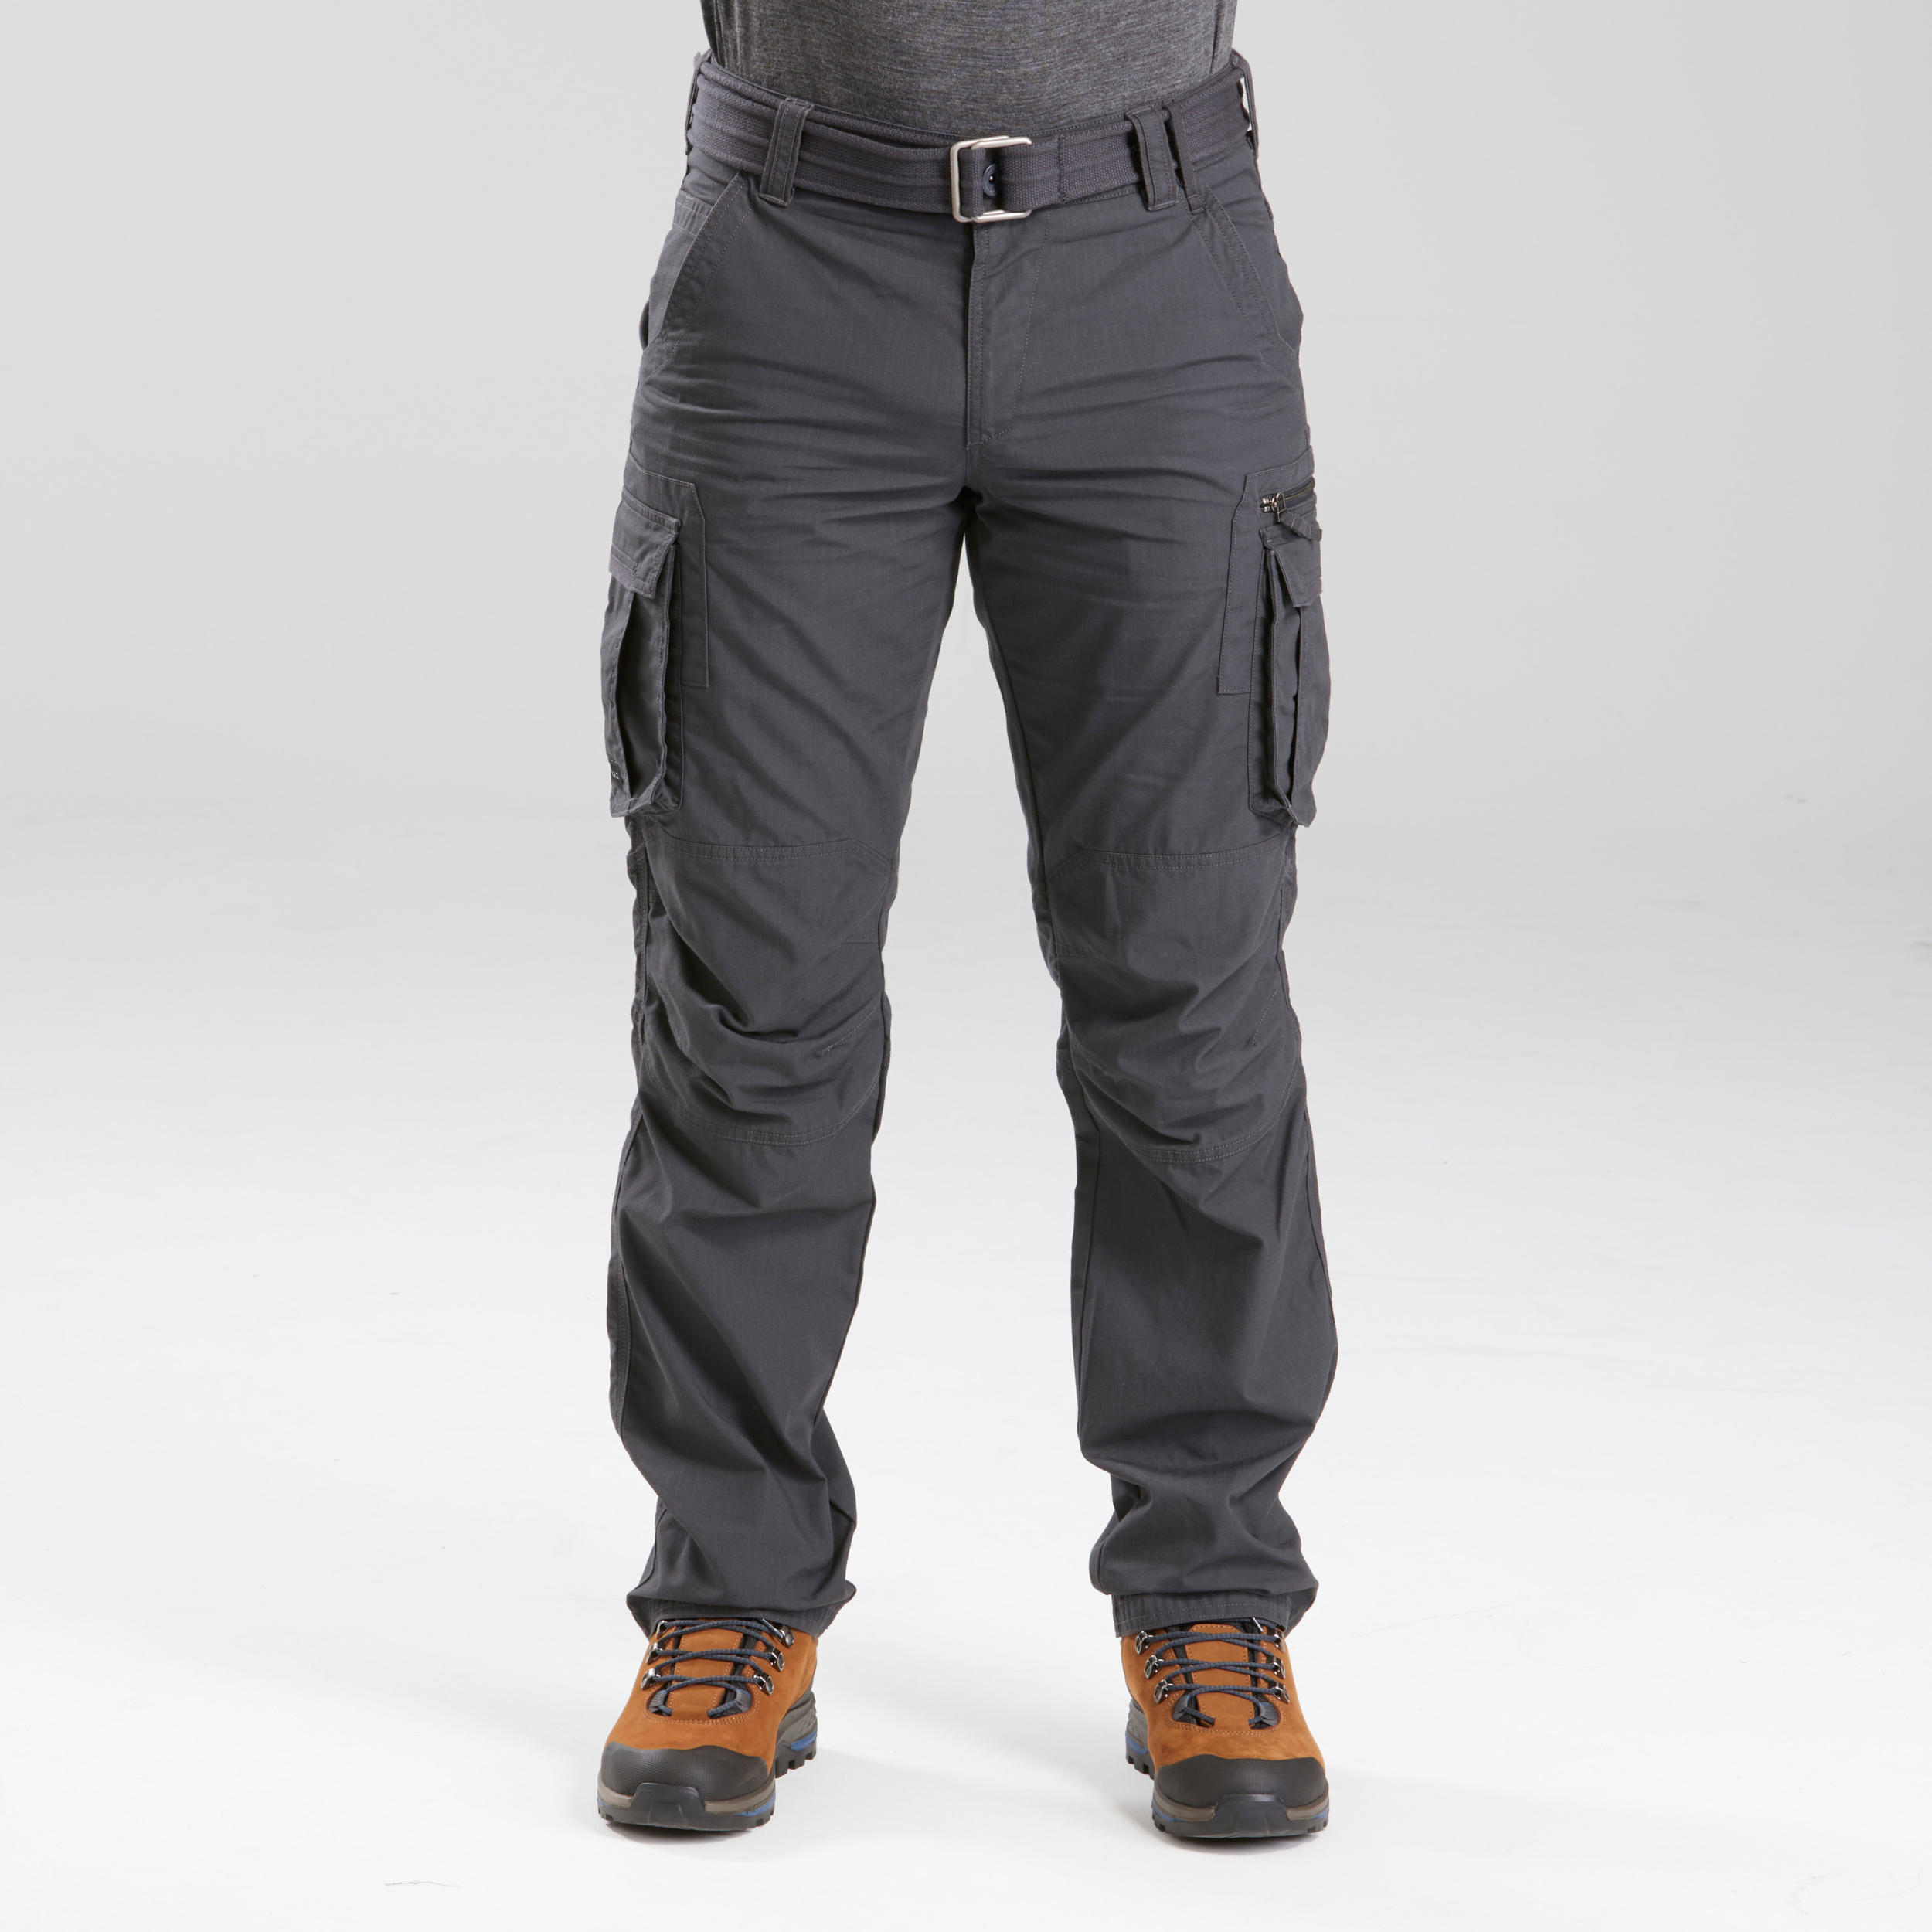 Men Cargo Trousers Pants SG-300 - Grey-hkpdtq2012.edu.vn